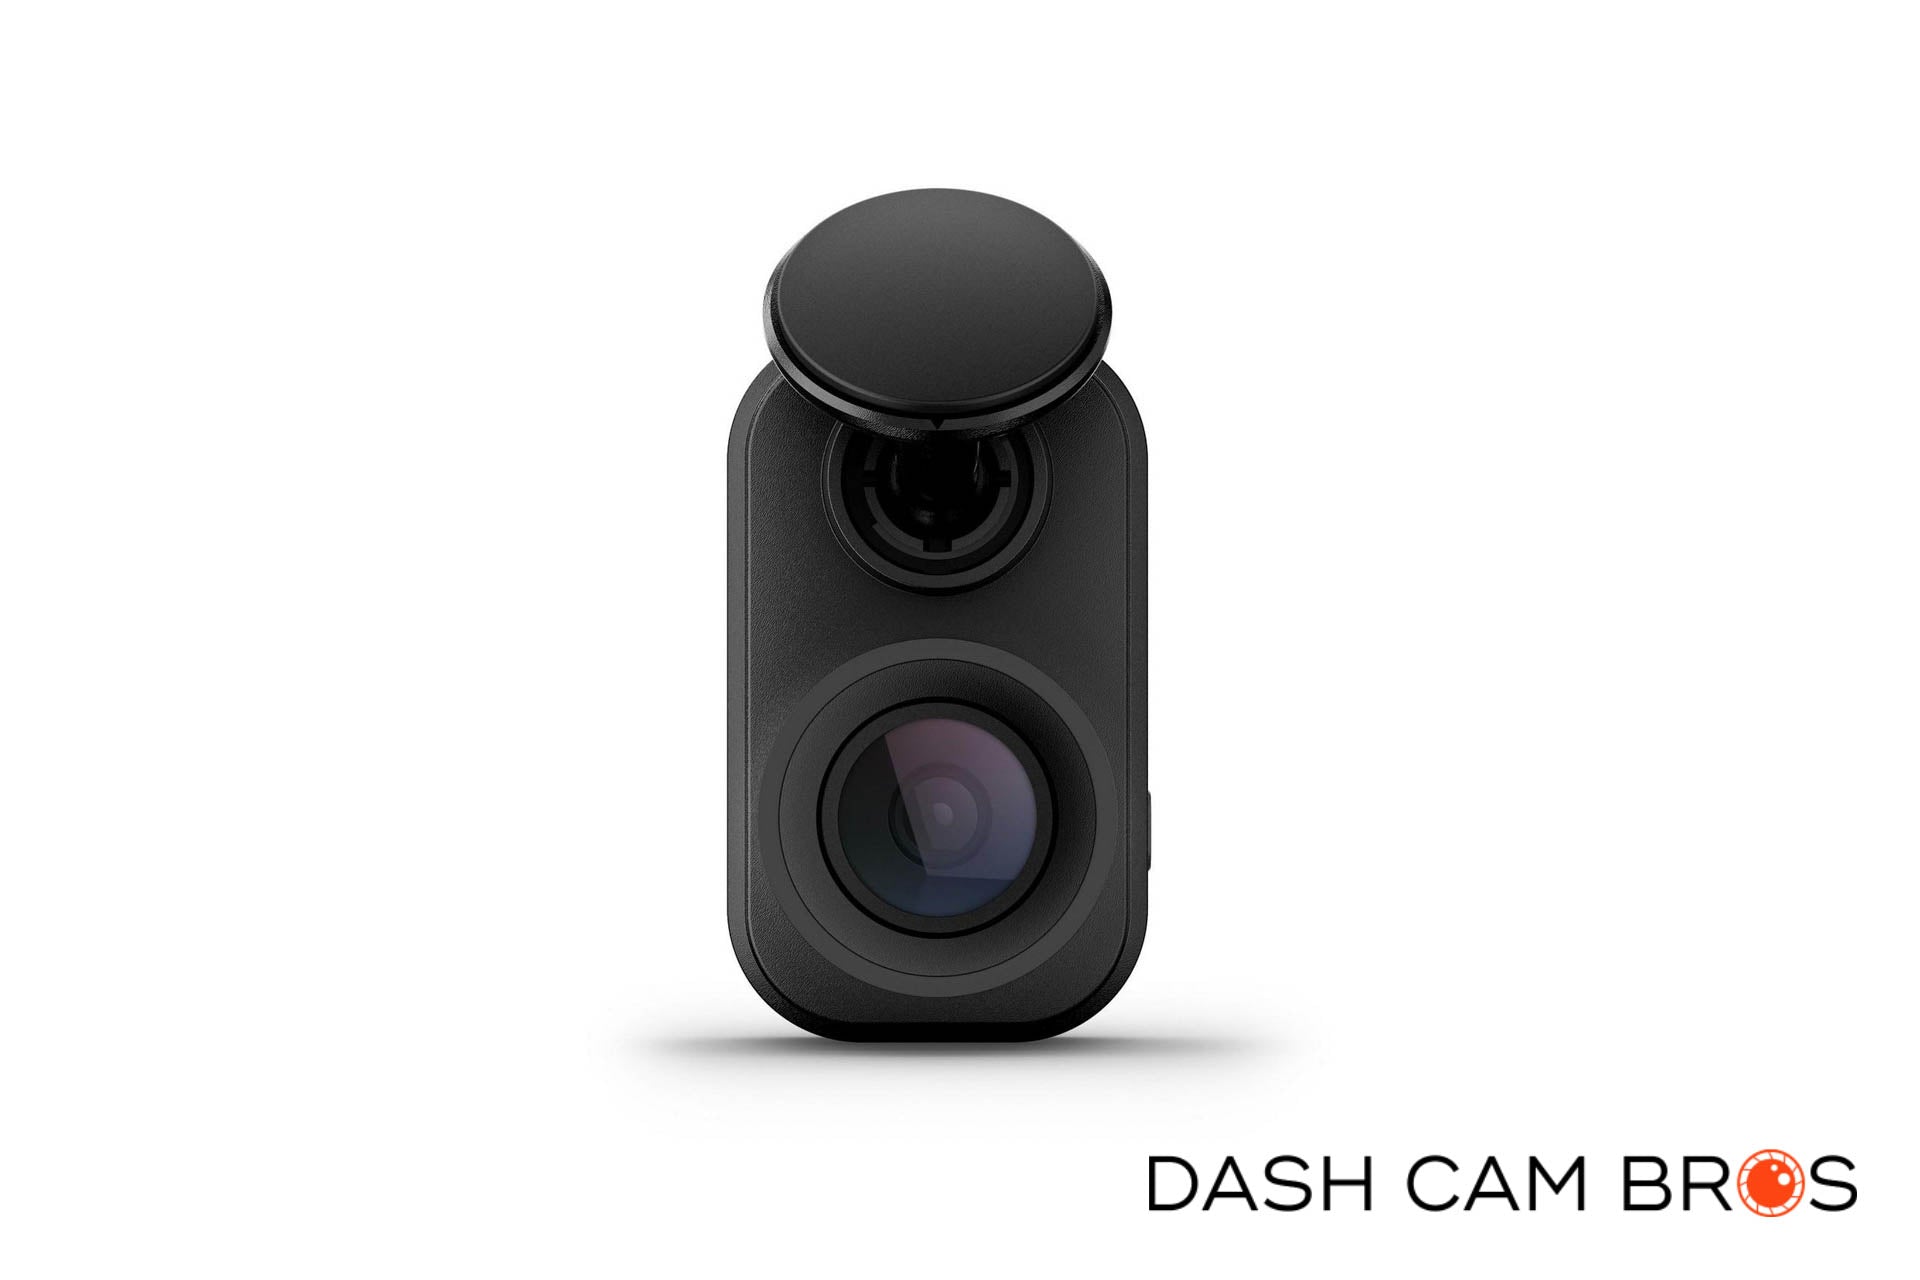 Garmin Dash Cam 56